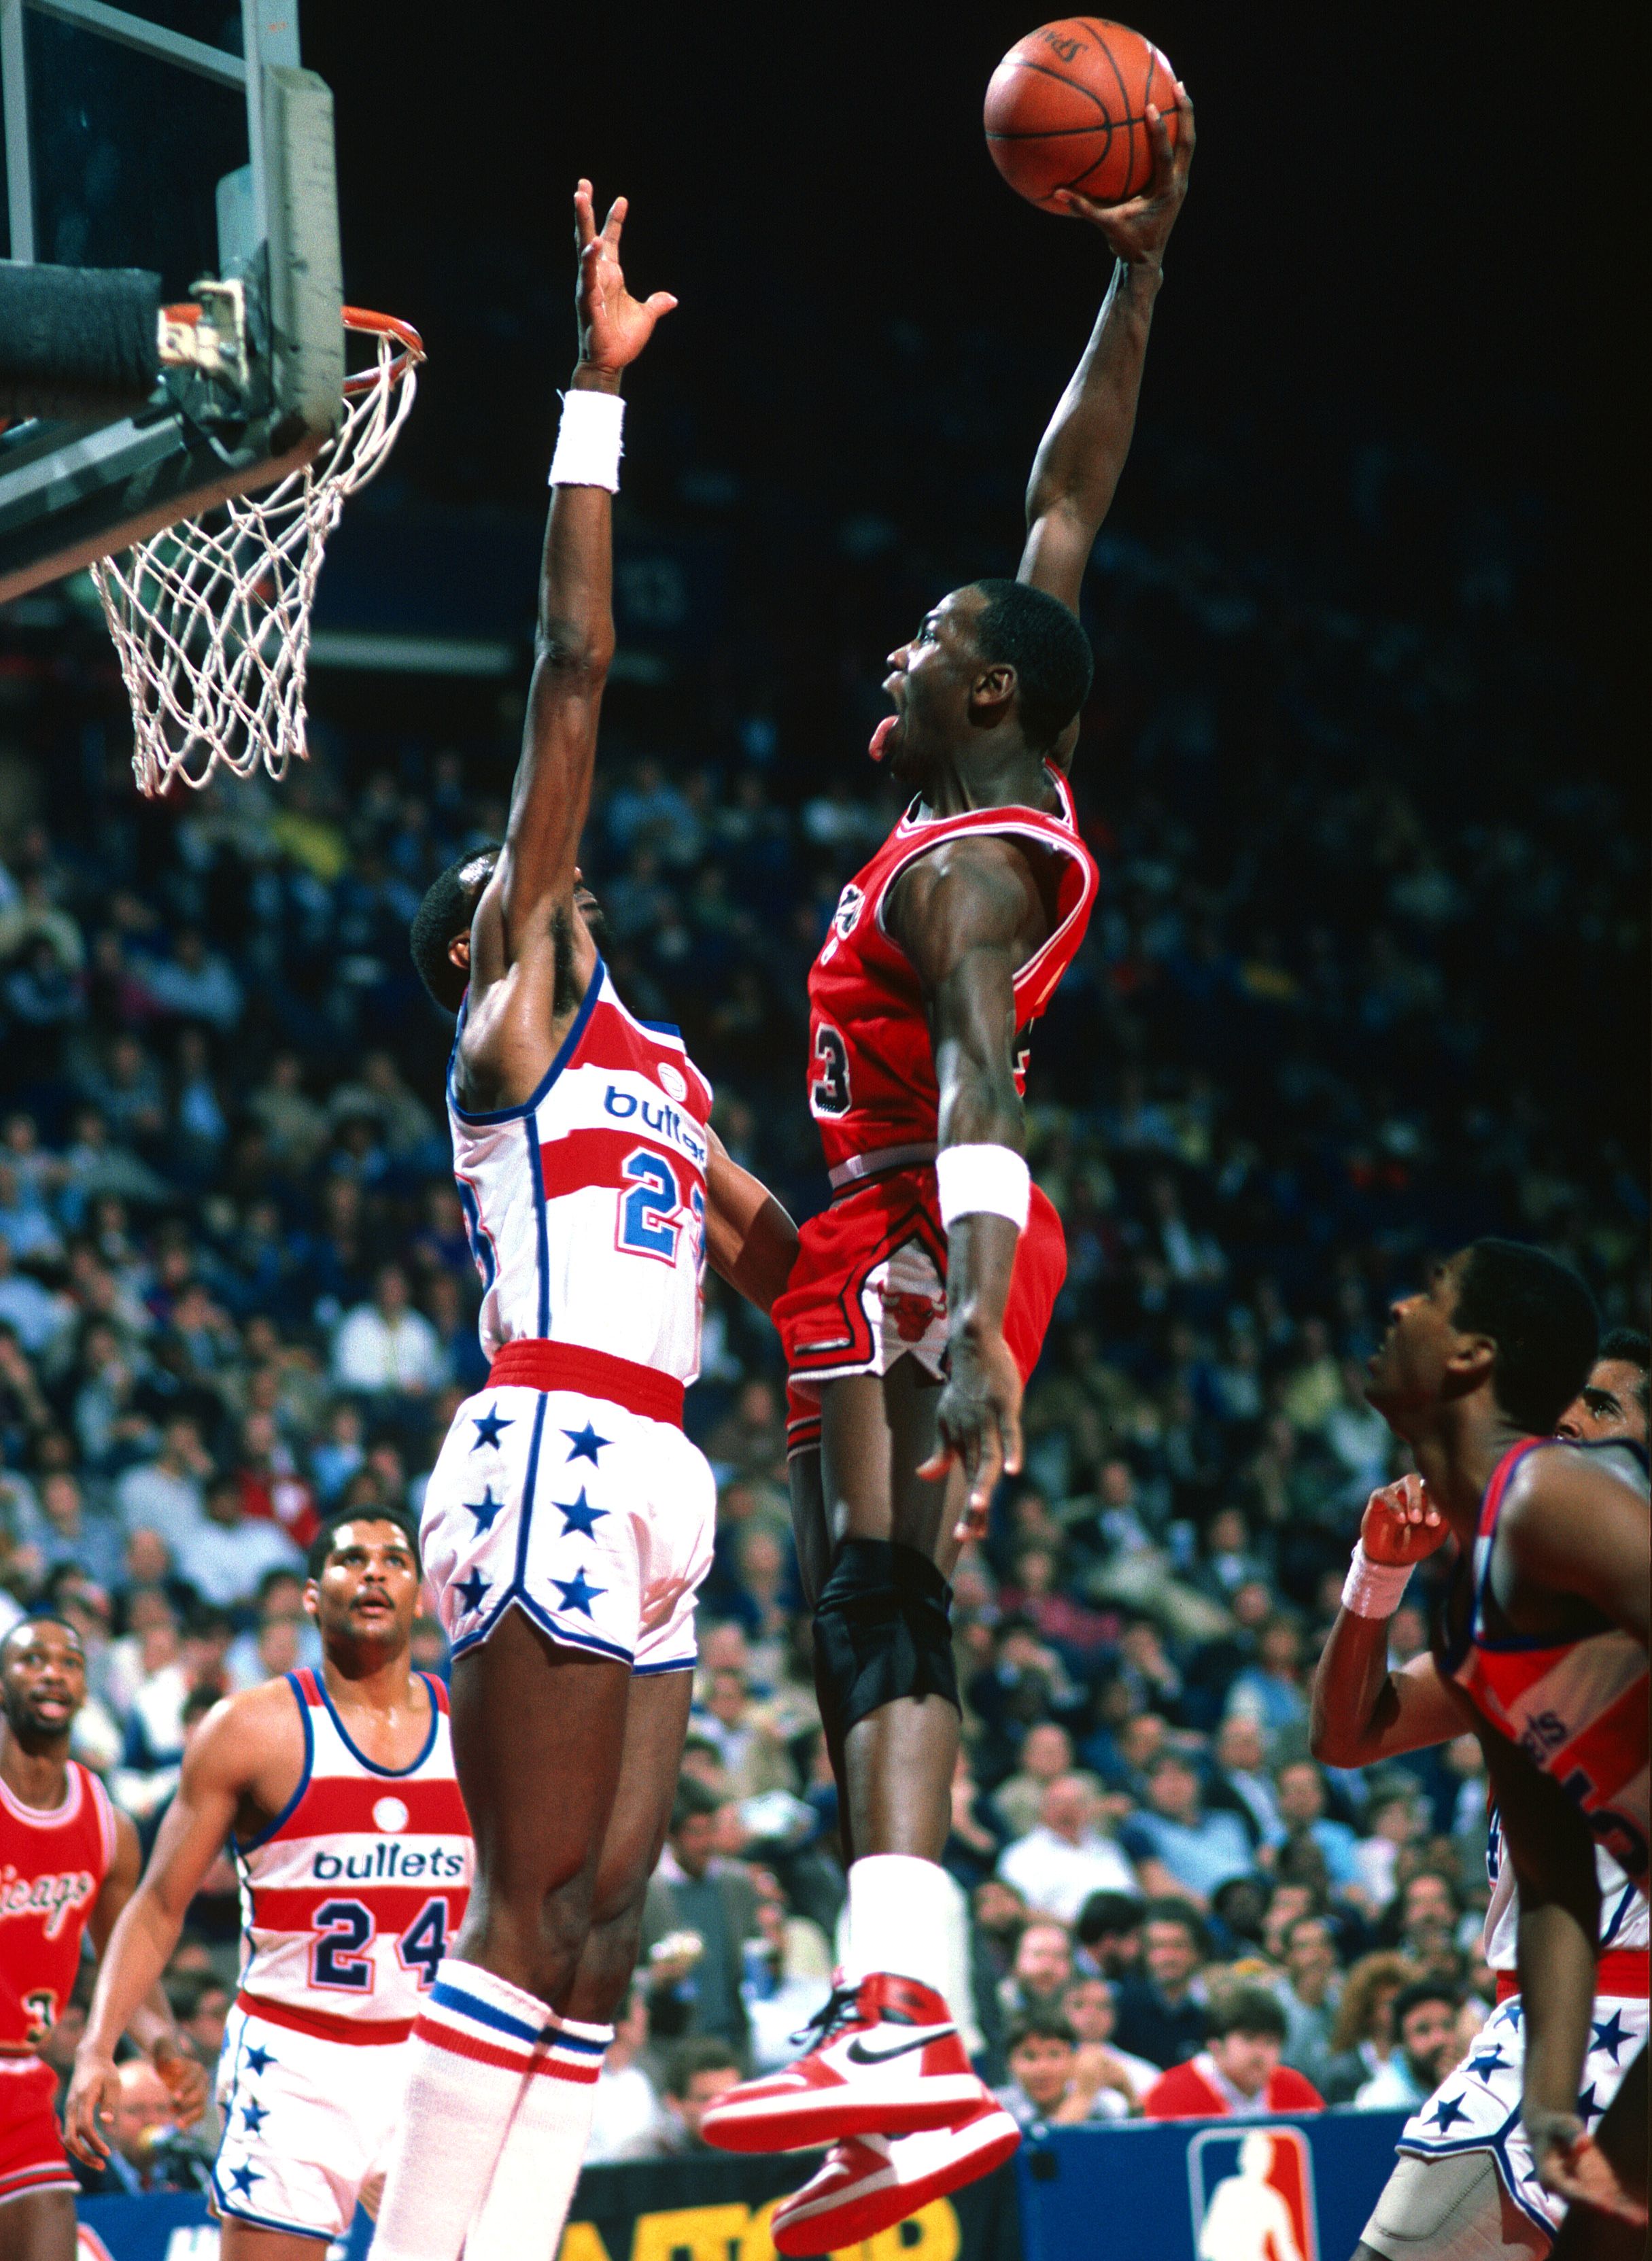 Michael Jordan , HD Wallpaper & Backgrounds